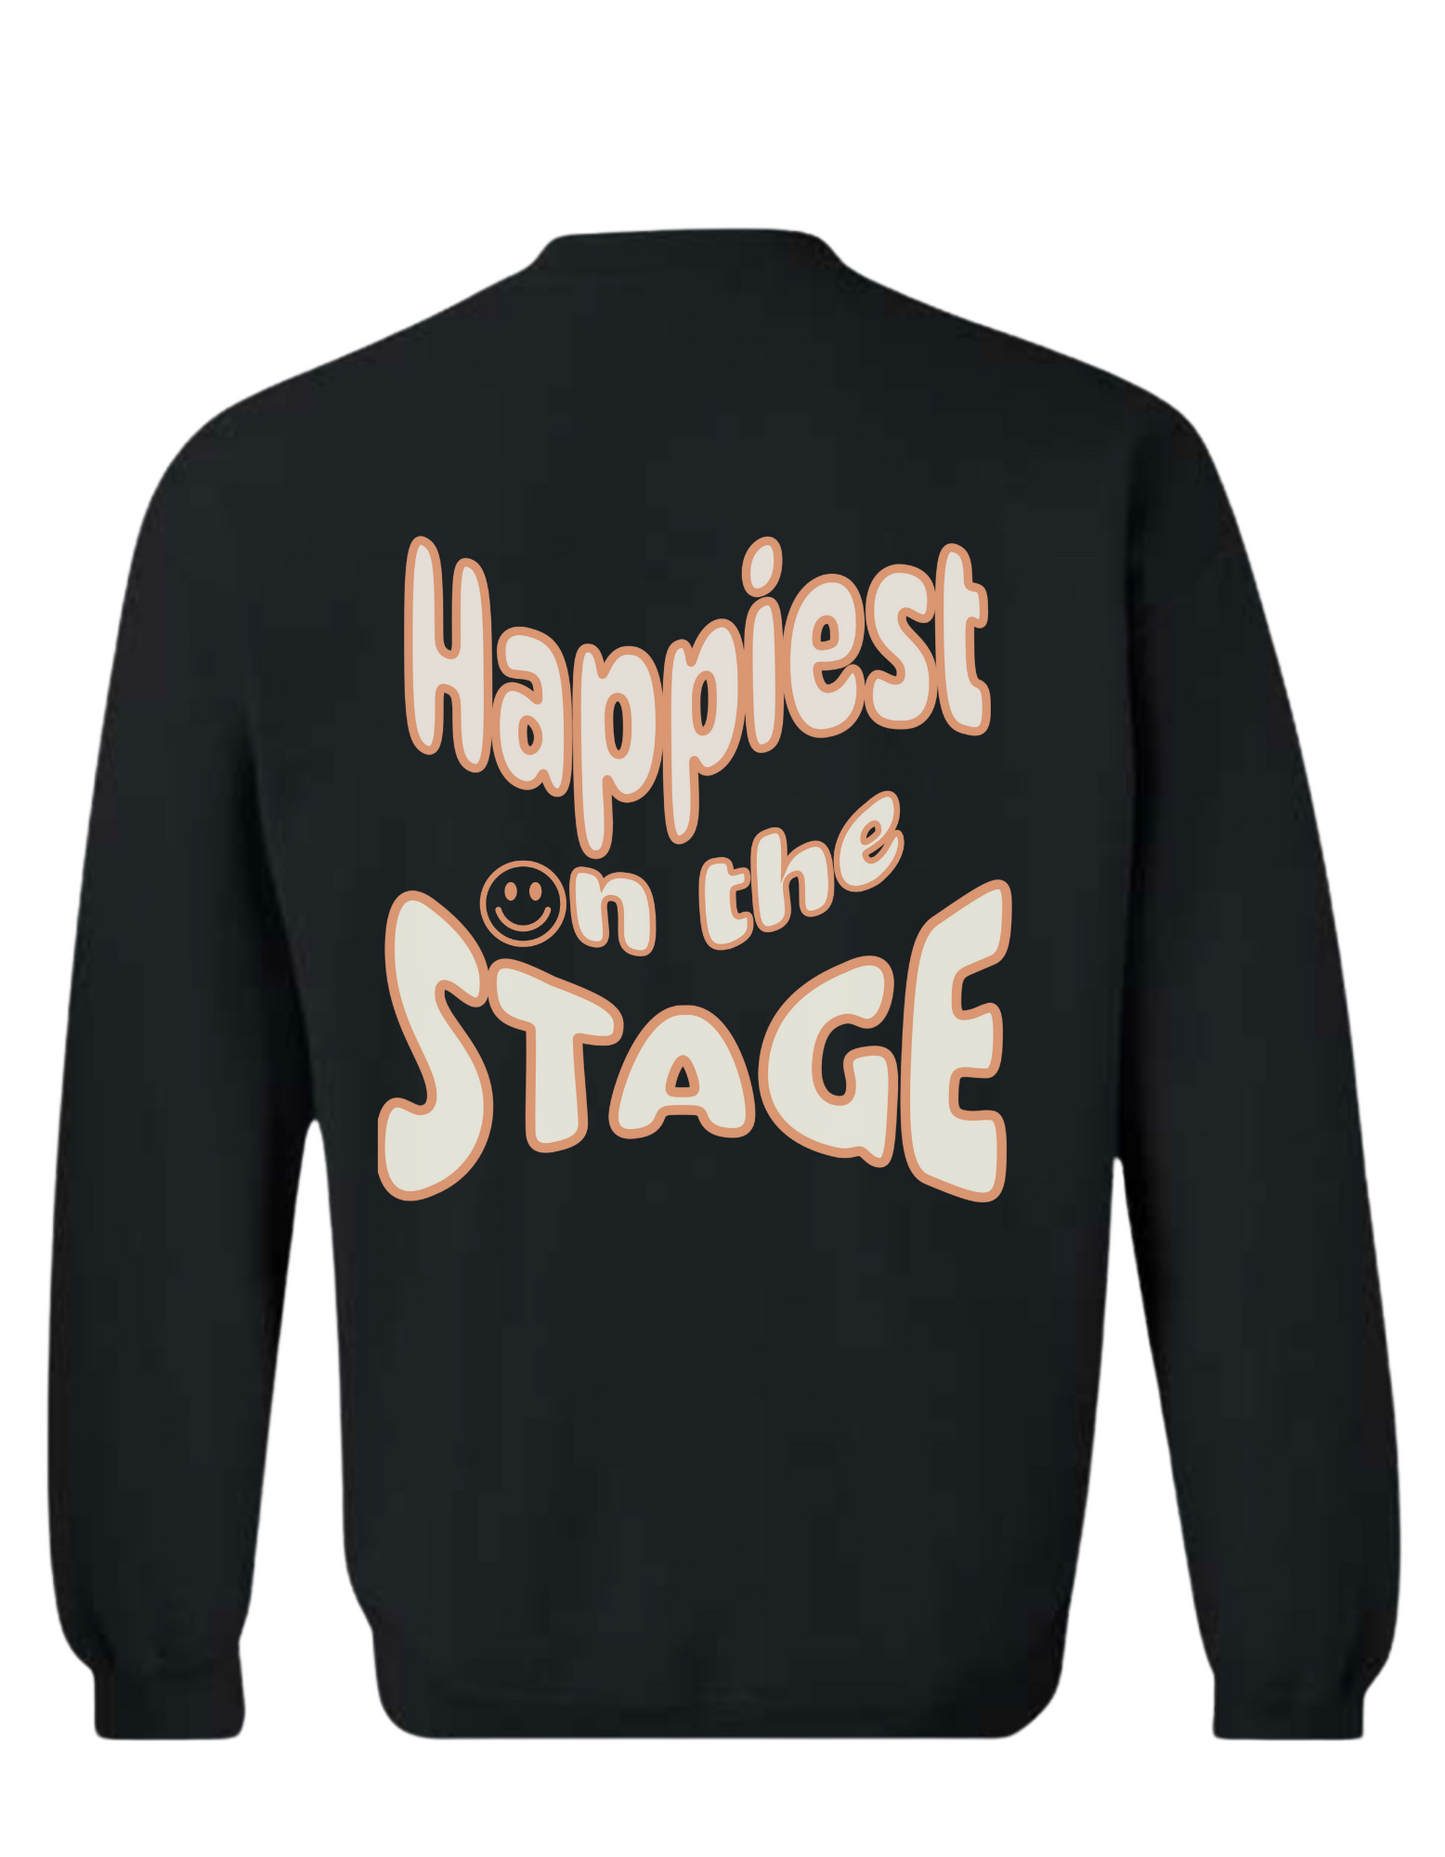 Happiest on the Stage - Adult Sweatshirt